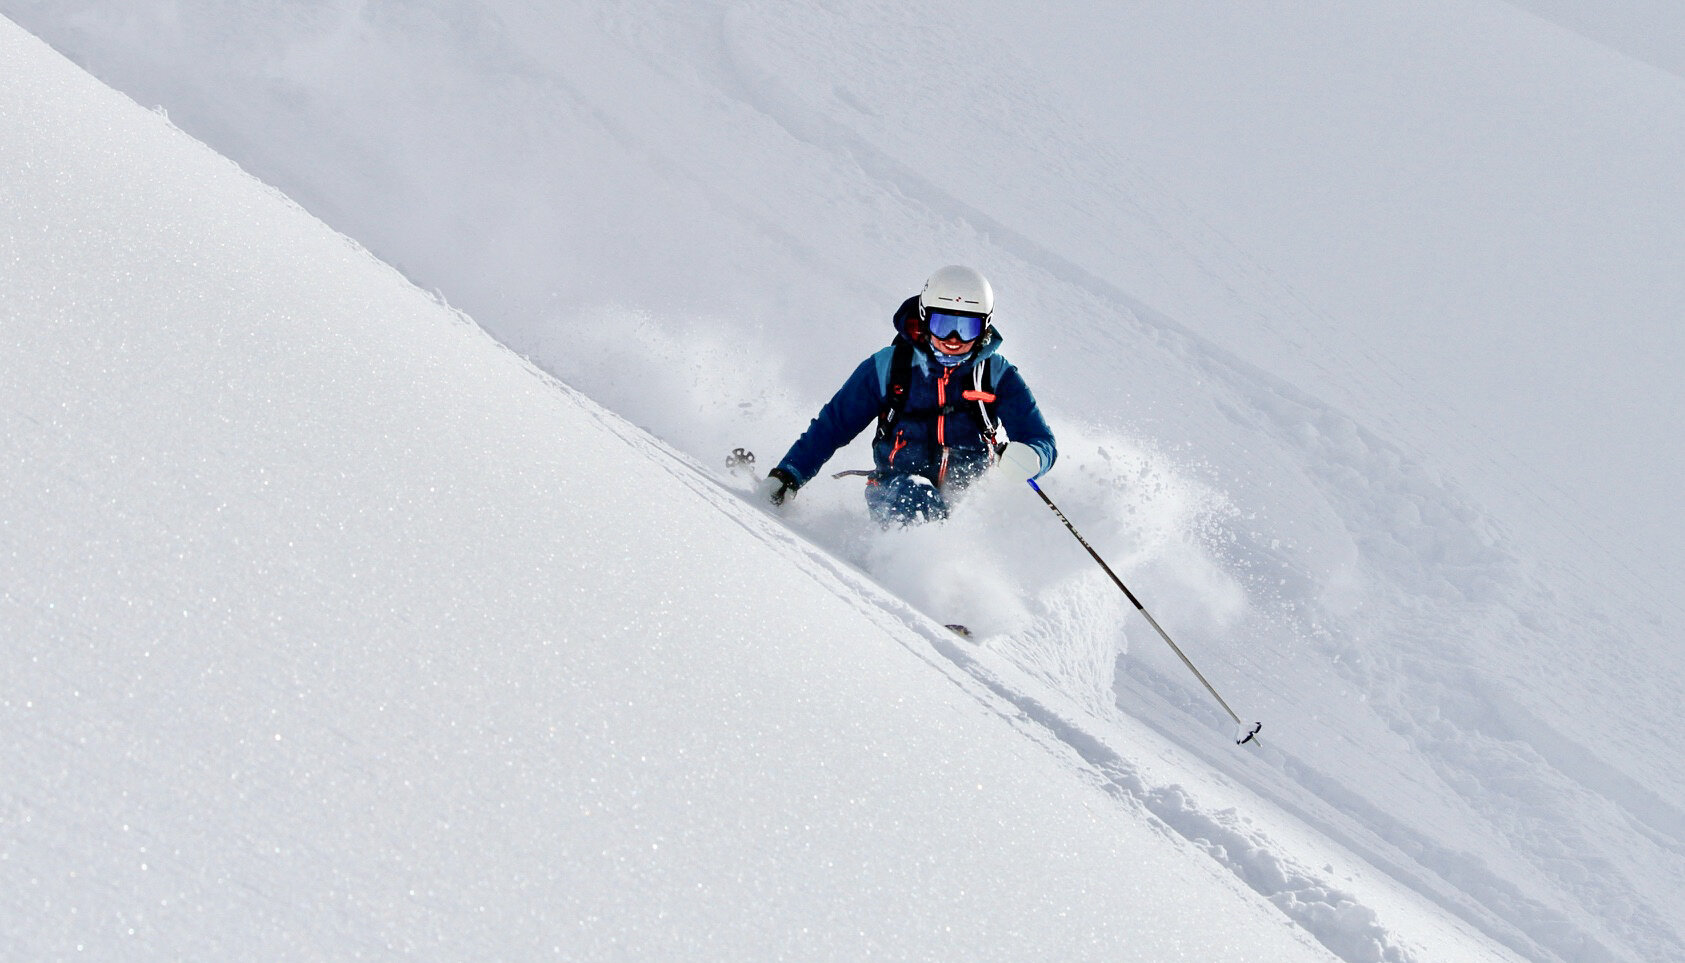 A skier enjoying the fresh powder and turns